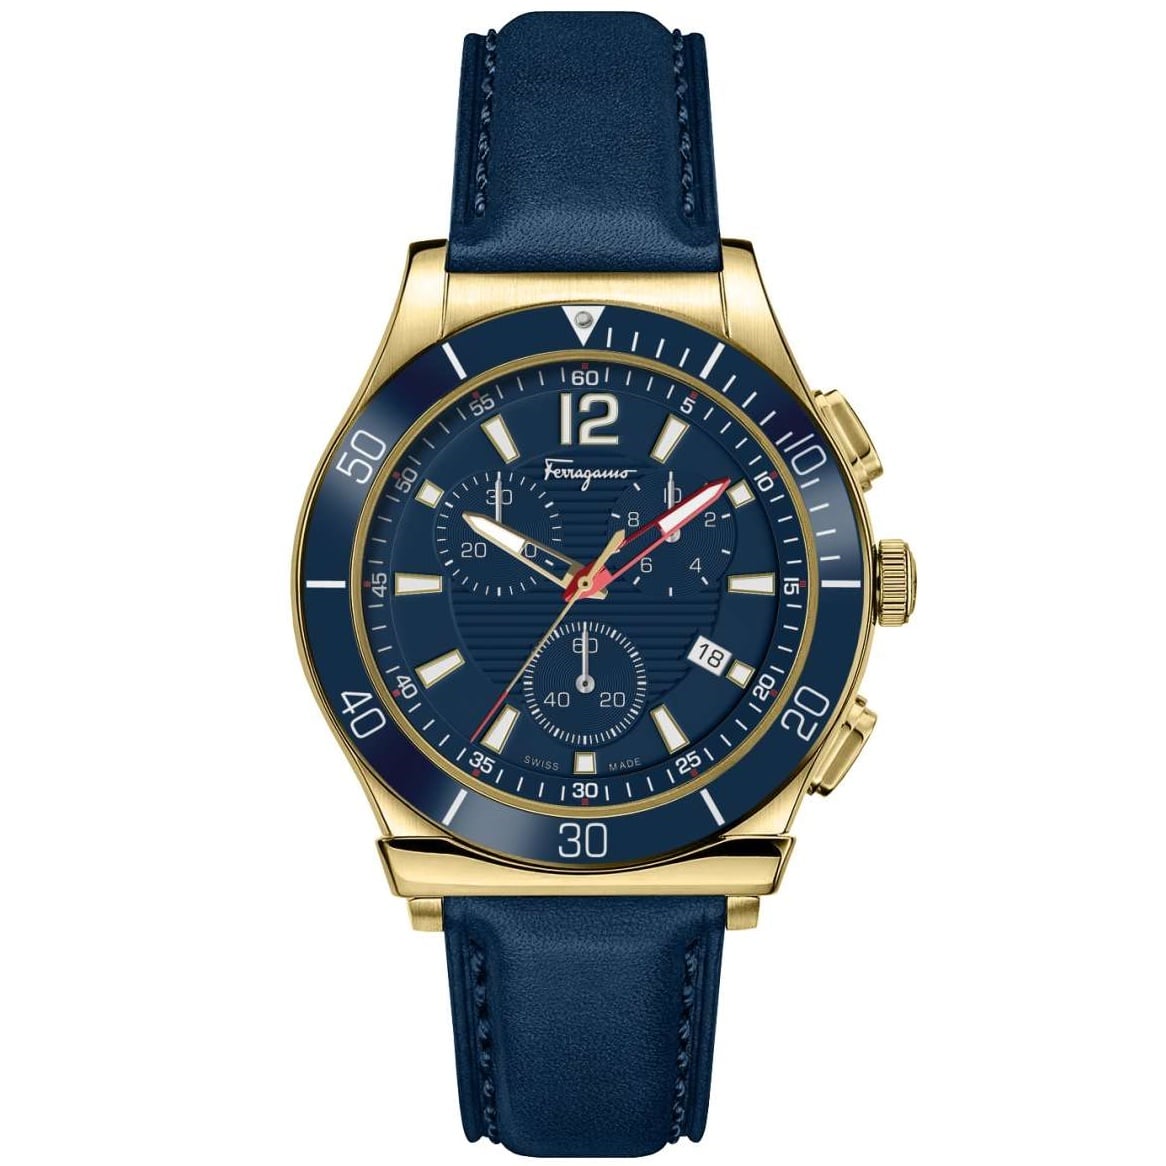 Timex The Guard DGTL TW5M30800 reloj deportivo negro para hombre